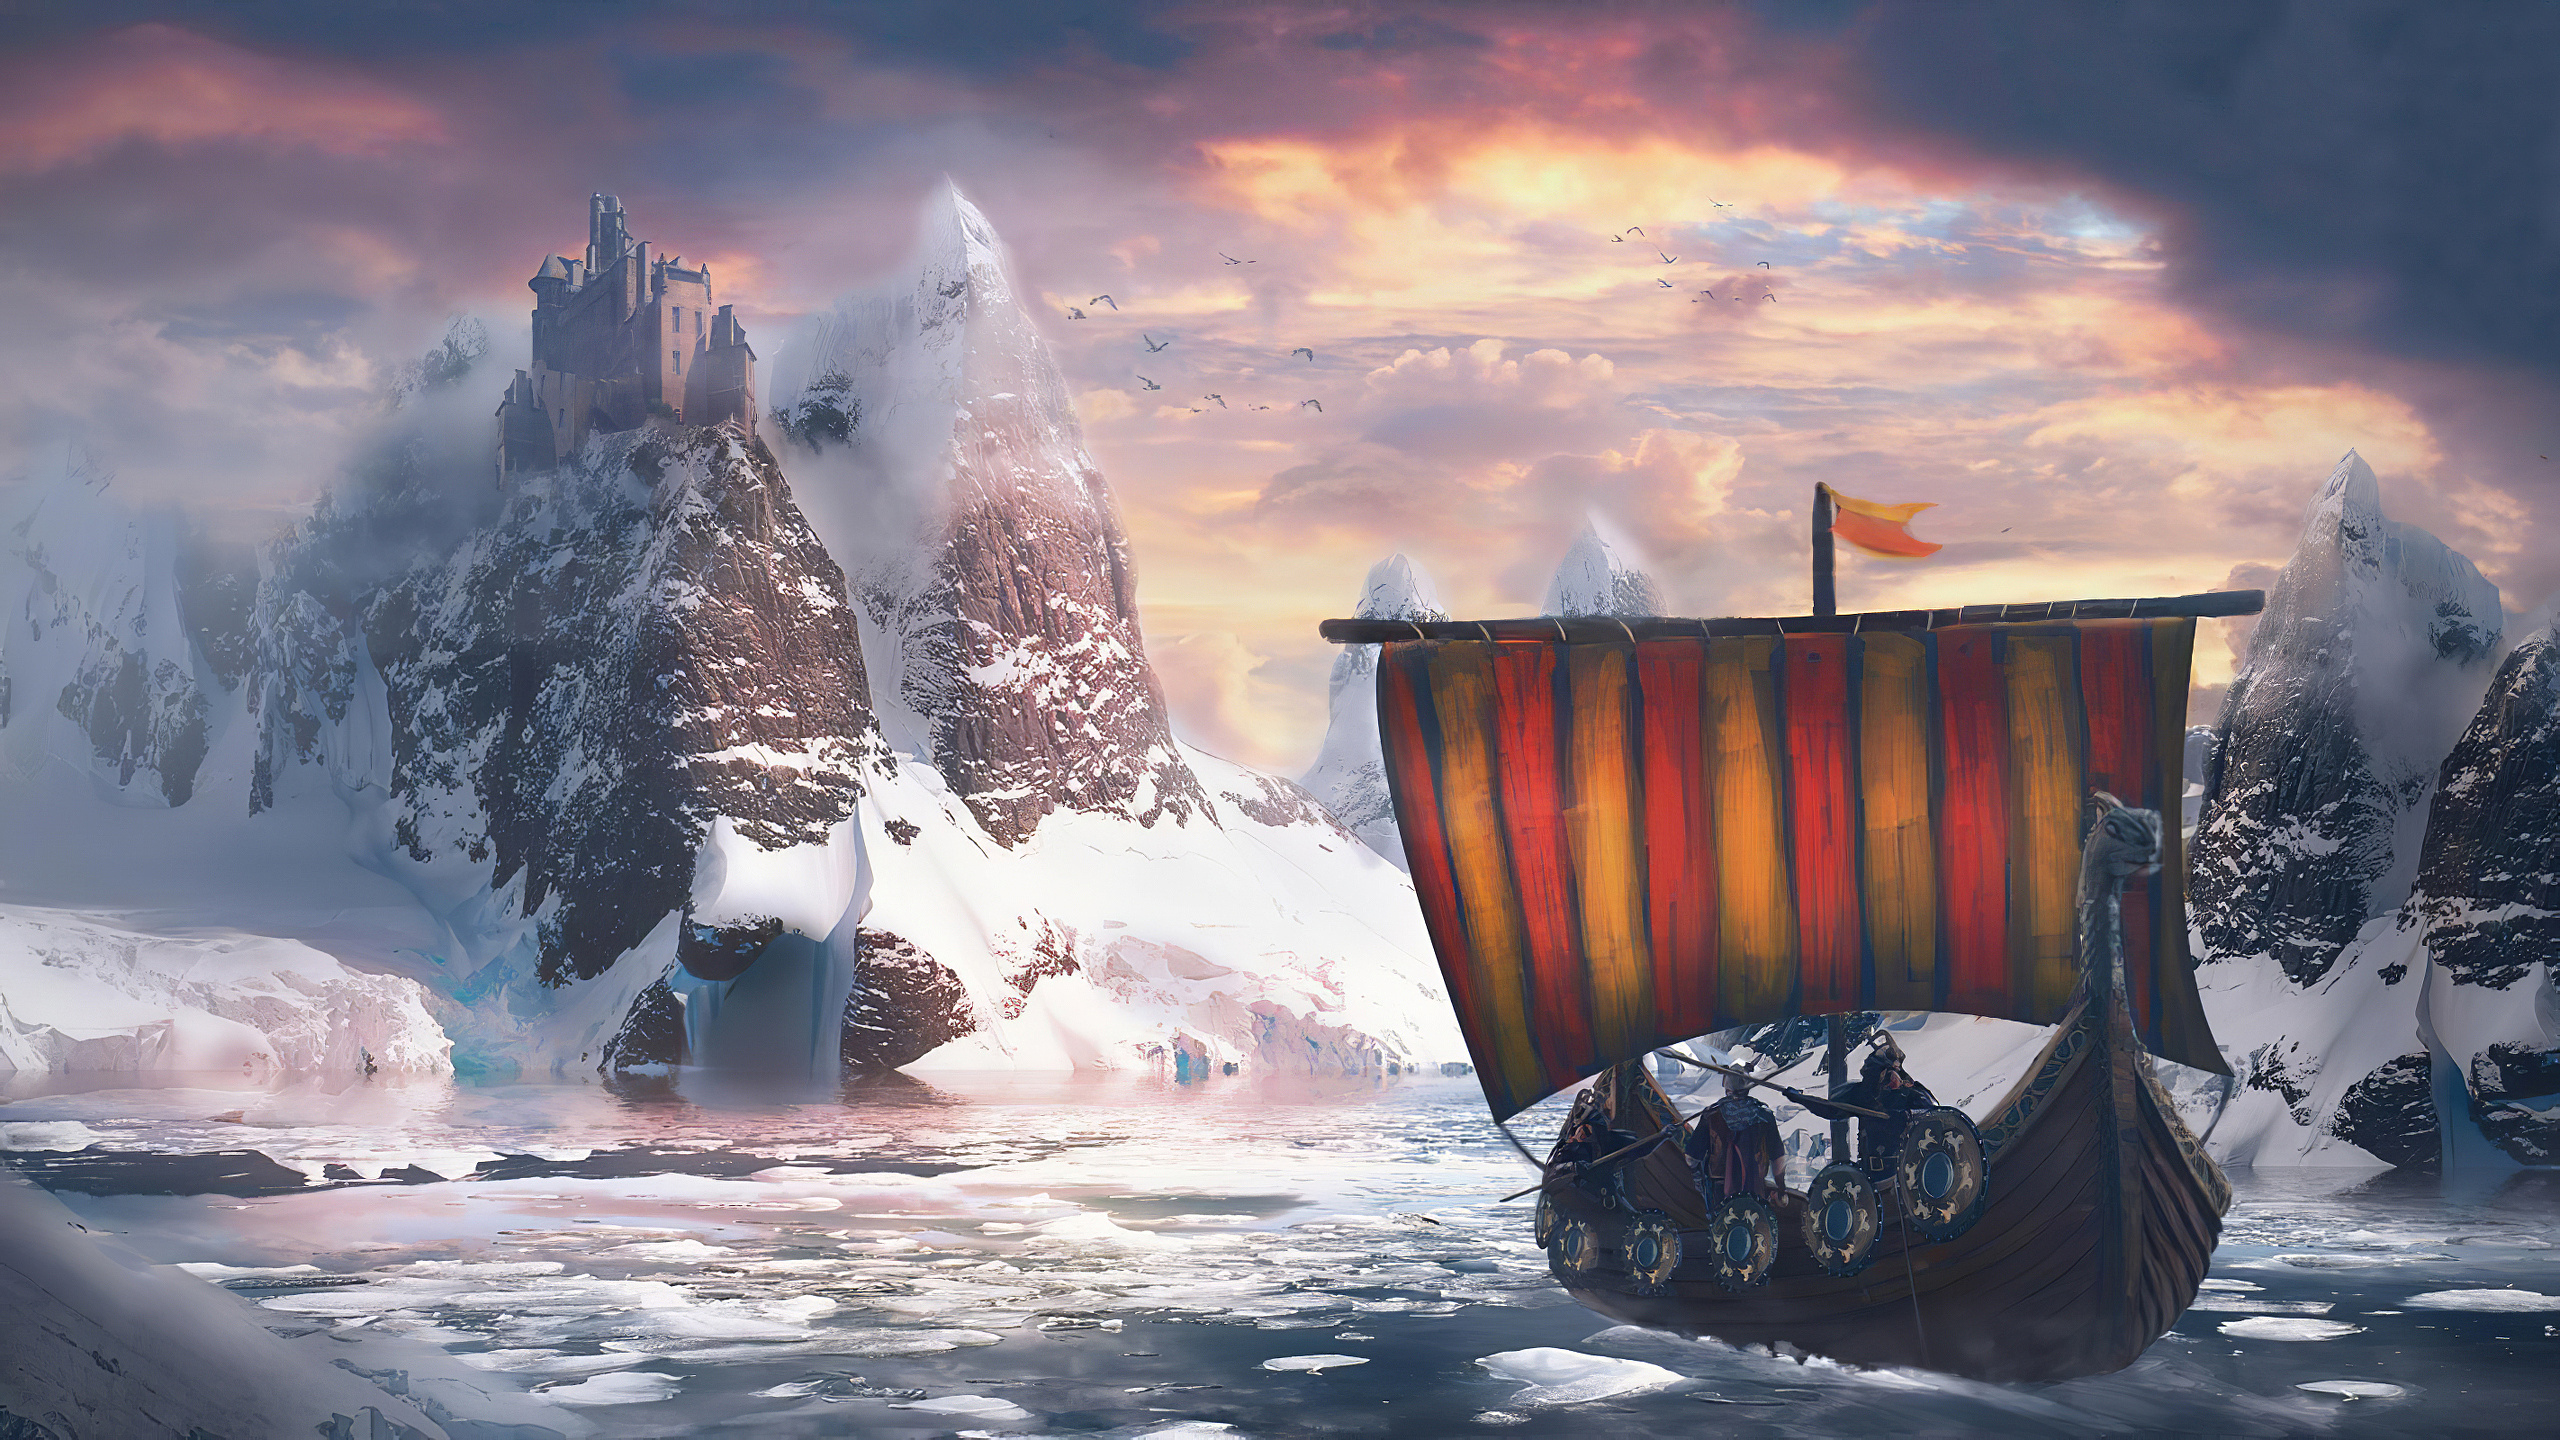 General 2560x1440 digital art Drakkar Vikings castle snow cold ice water rocks mountains